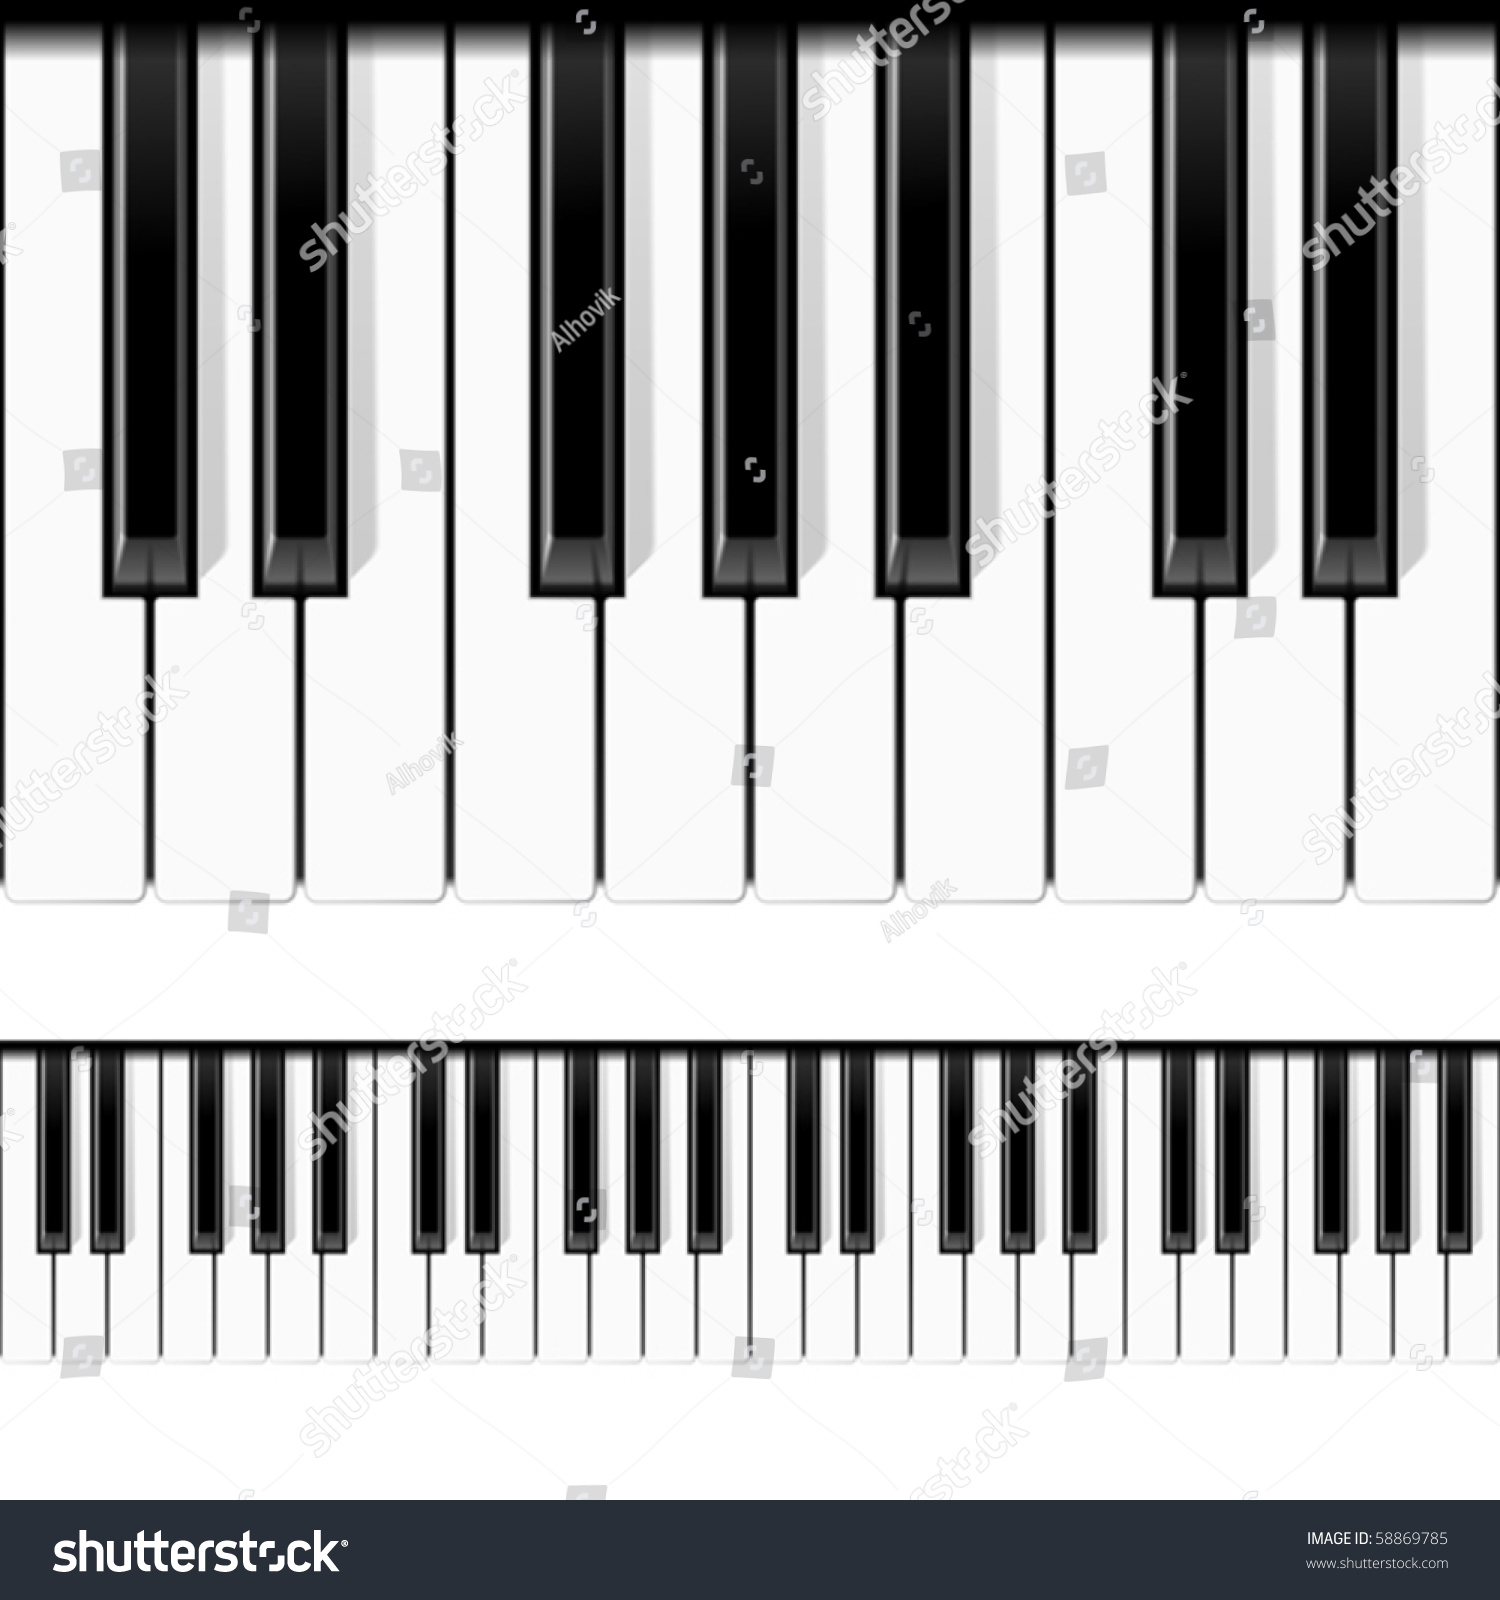 Piano Keys. Seamless Vector. - 58869785 : Shutterstock